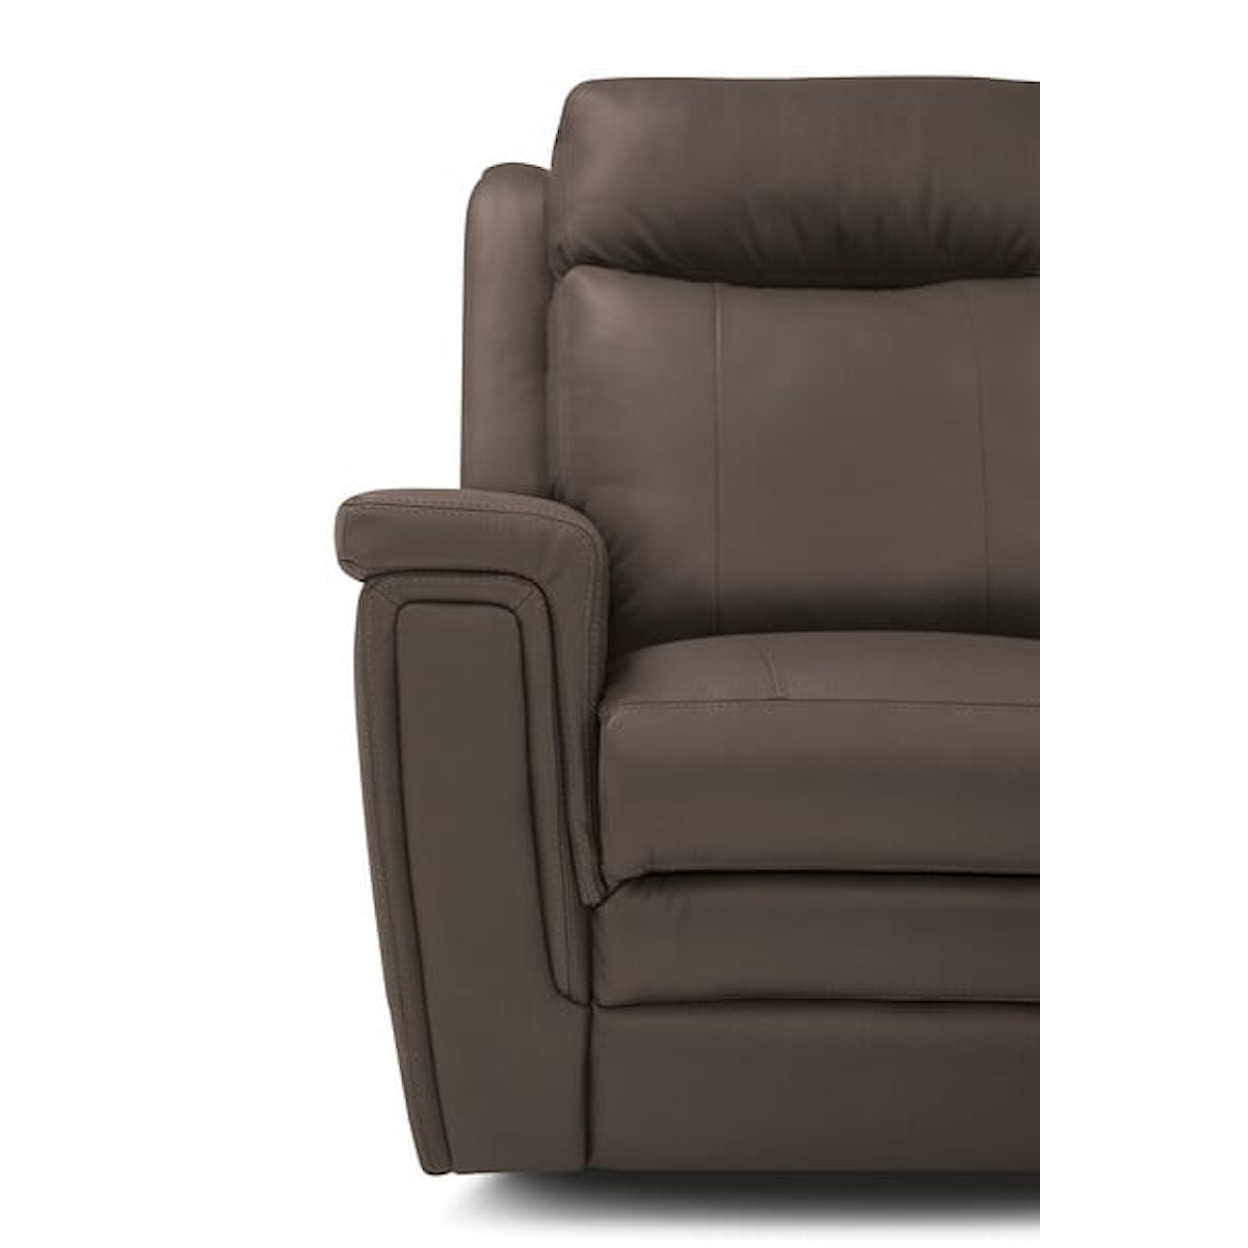 Palliser Asher Asher 5-Seat Sectional Sofa